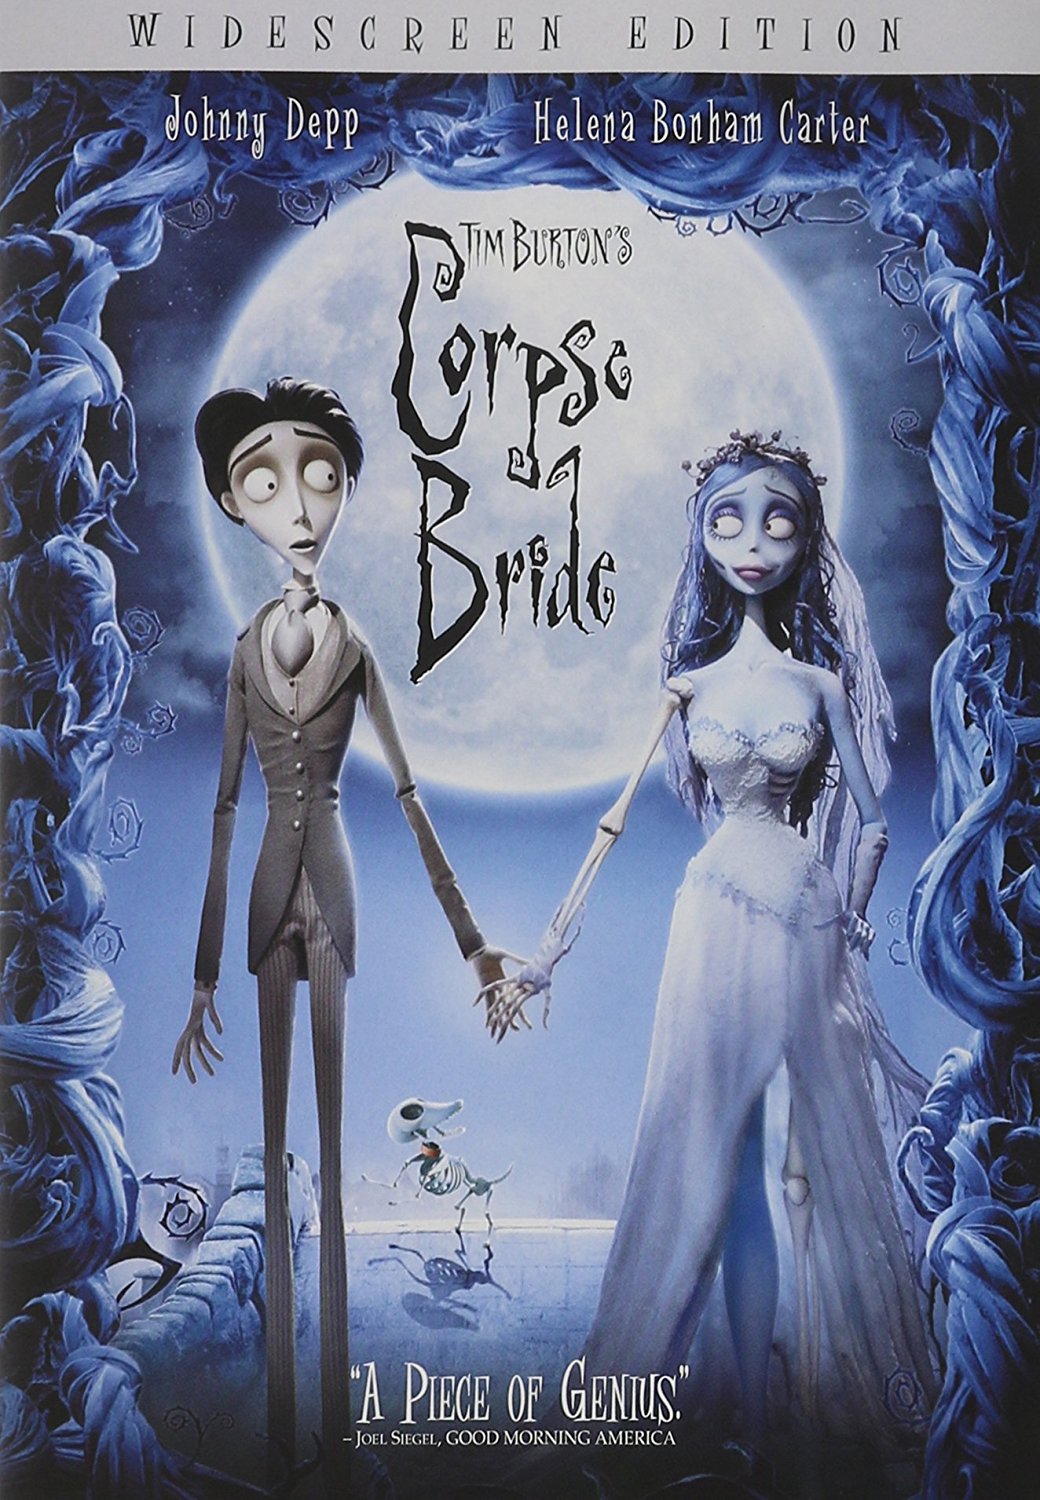 Tim Burton’s Corpse Bride on DVD – Just $3.74!